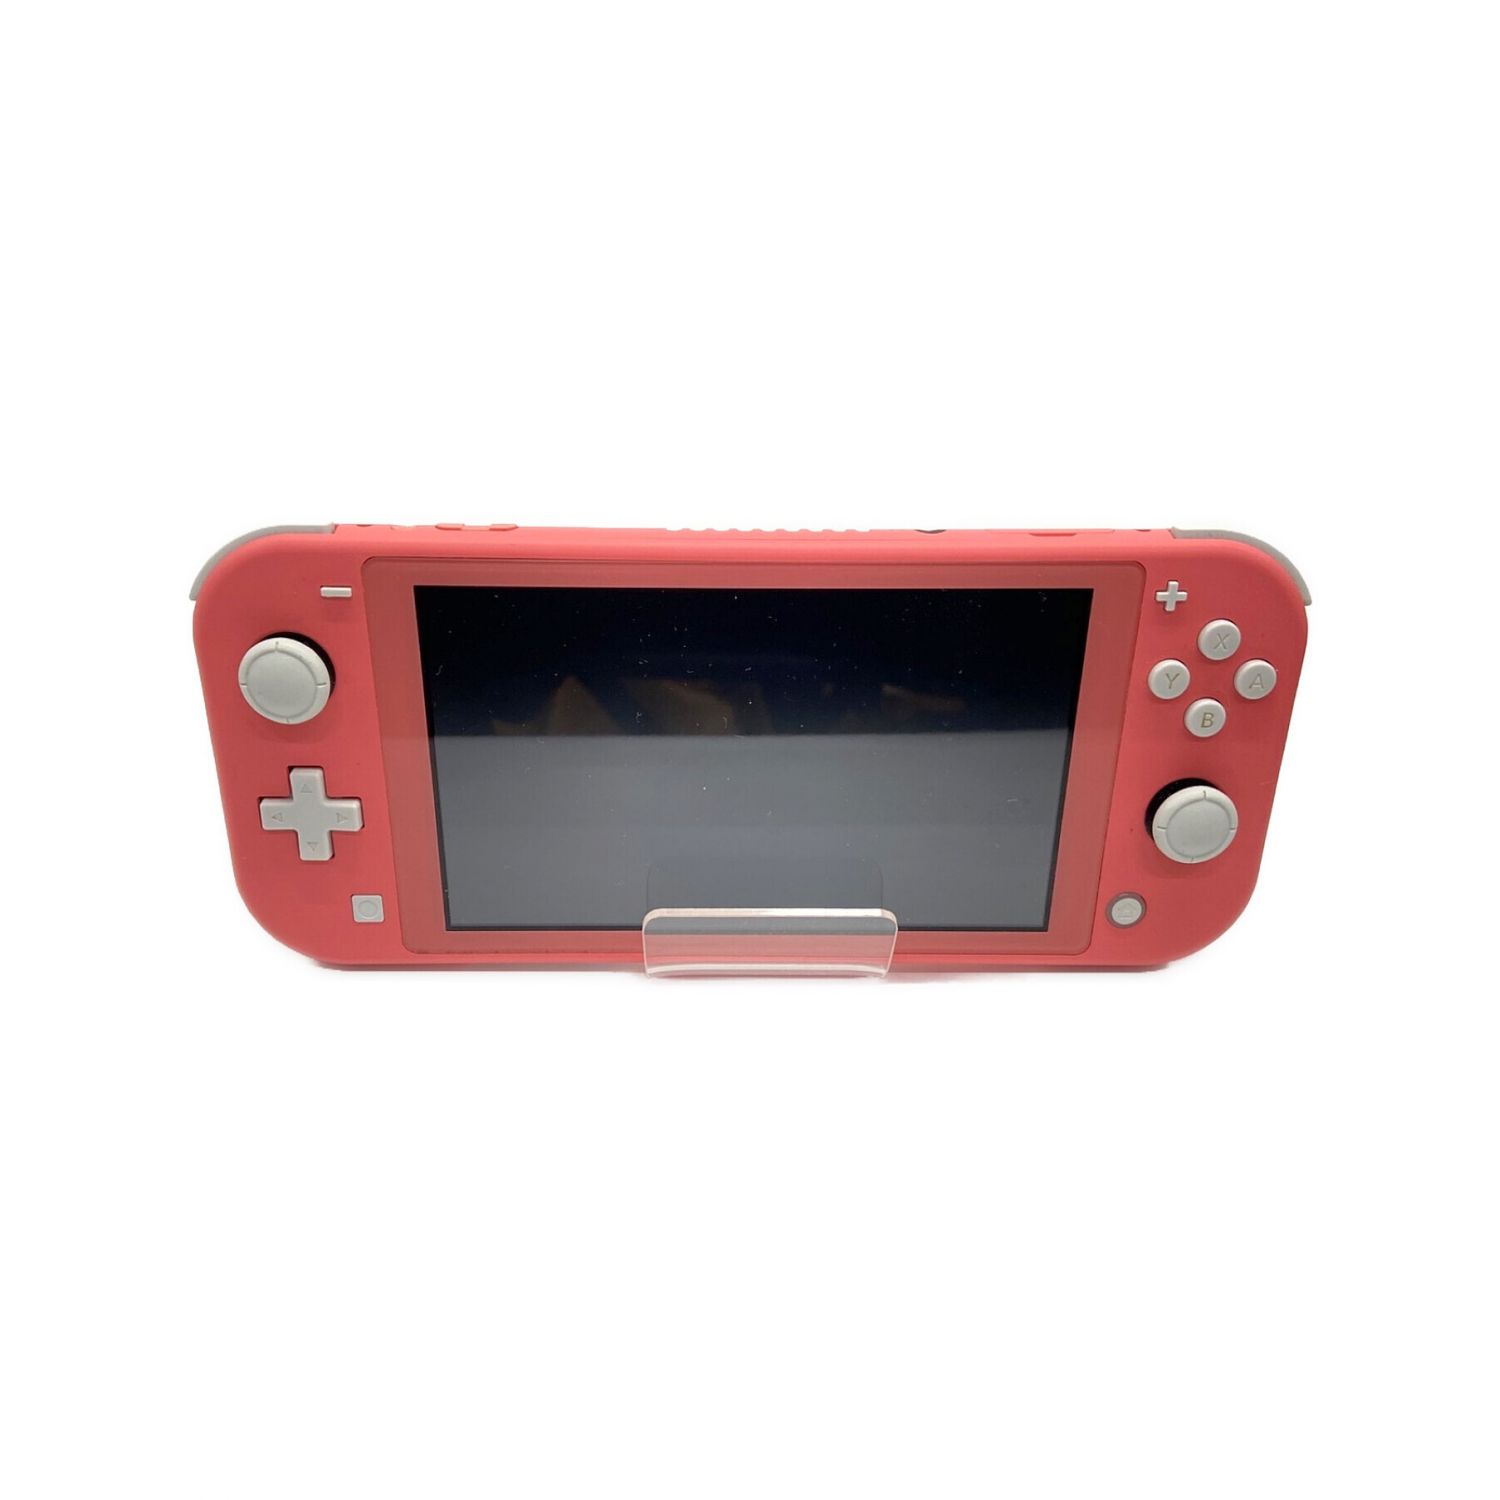 Nintendo (ニンテンドウ) Nintendo Switch Lite HDH-001 動作確認済み XJ70020468302